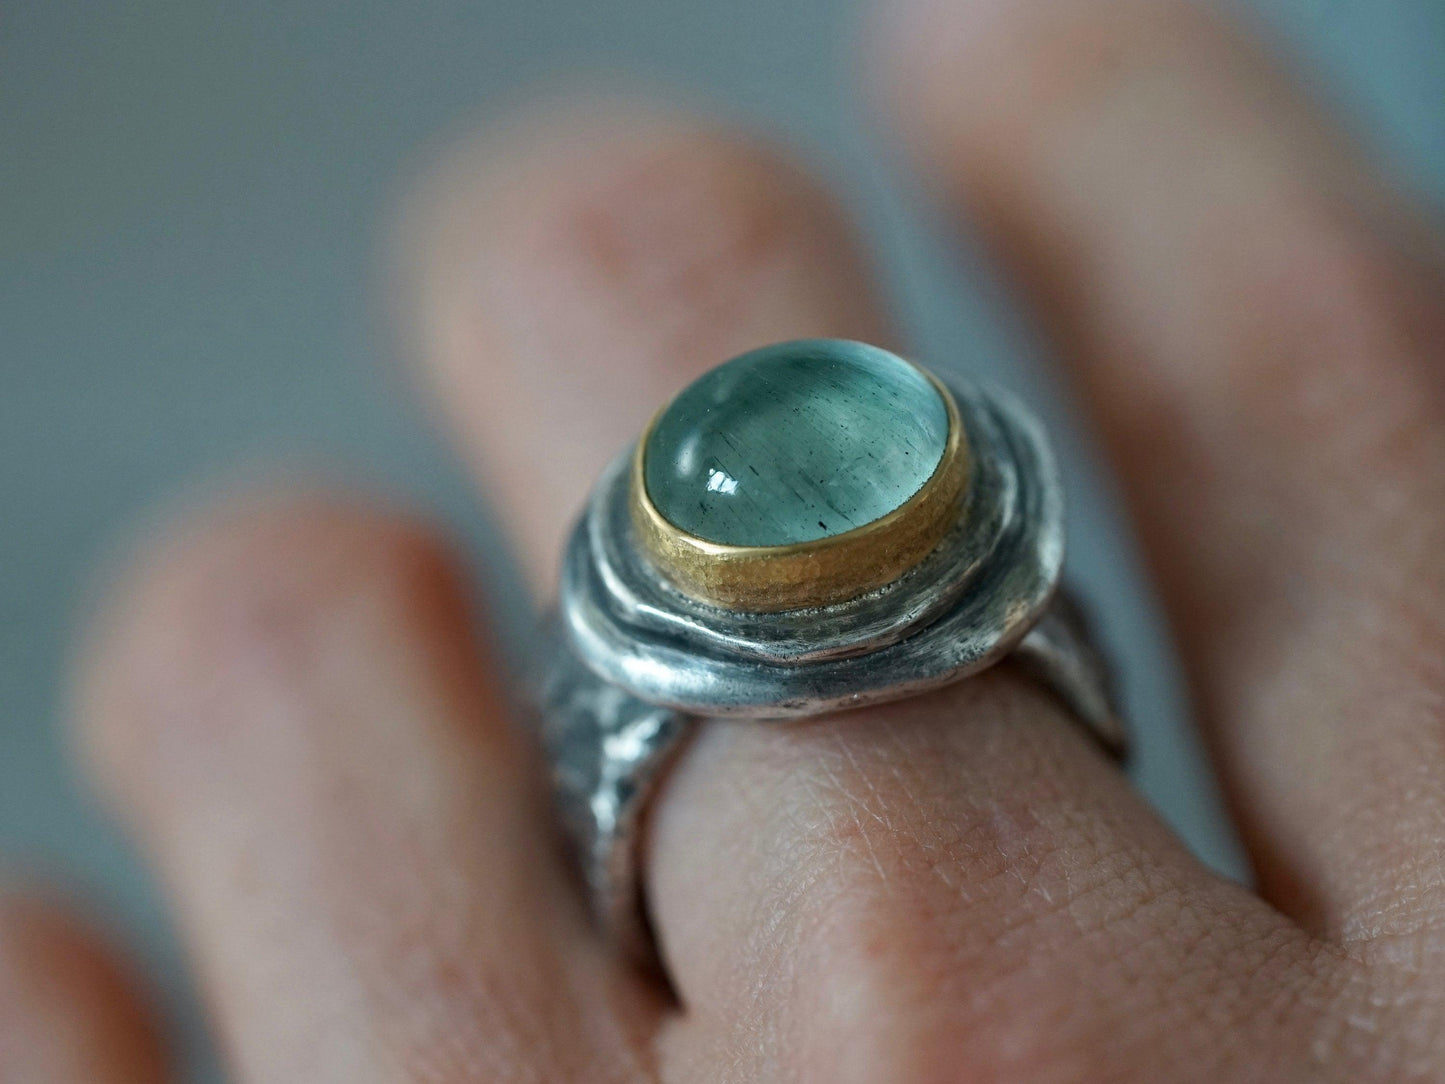 Aquamarine statement ring, 22k gold setting, size 7.25